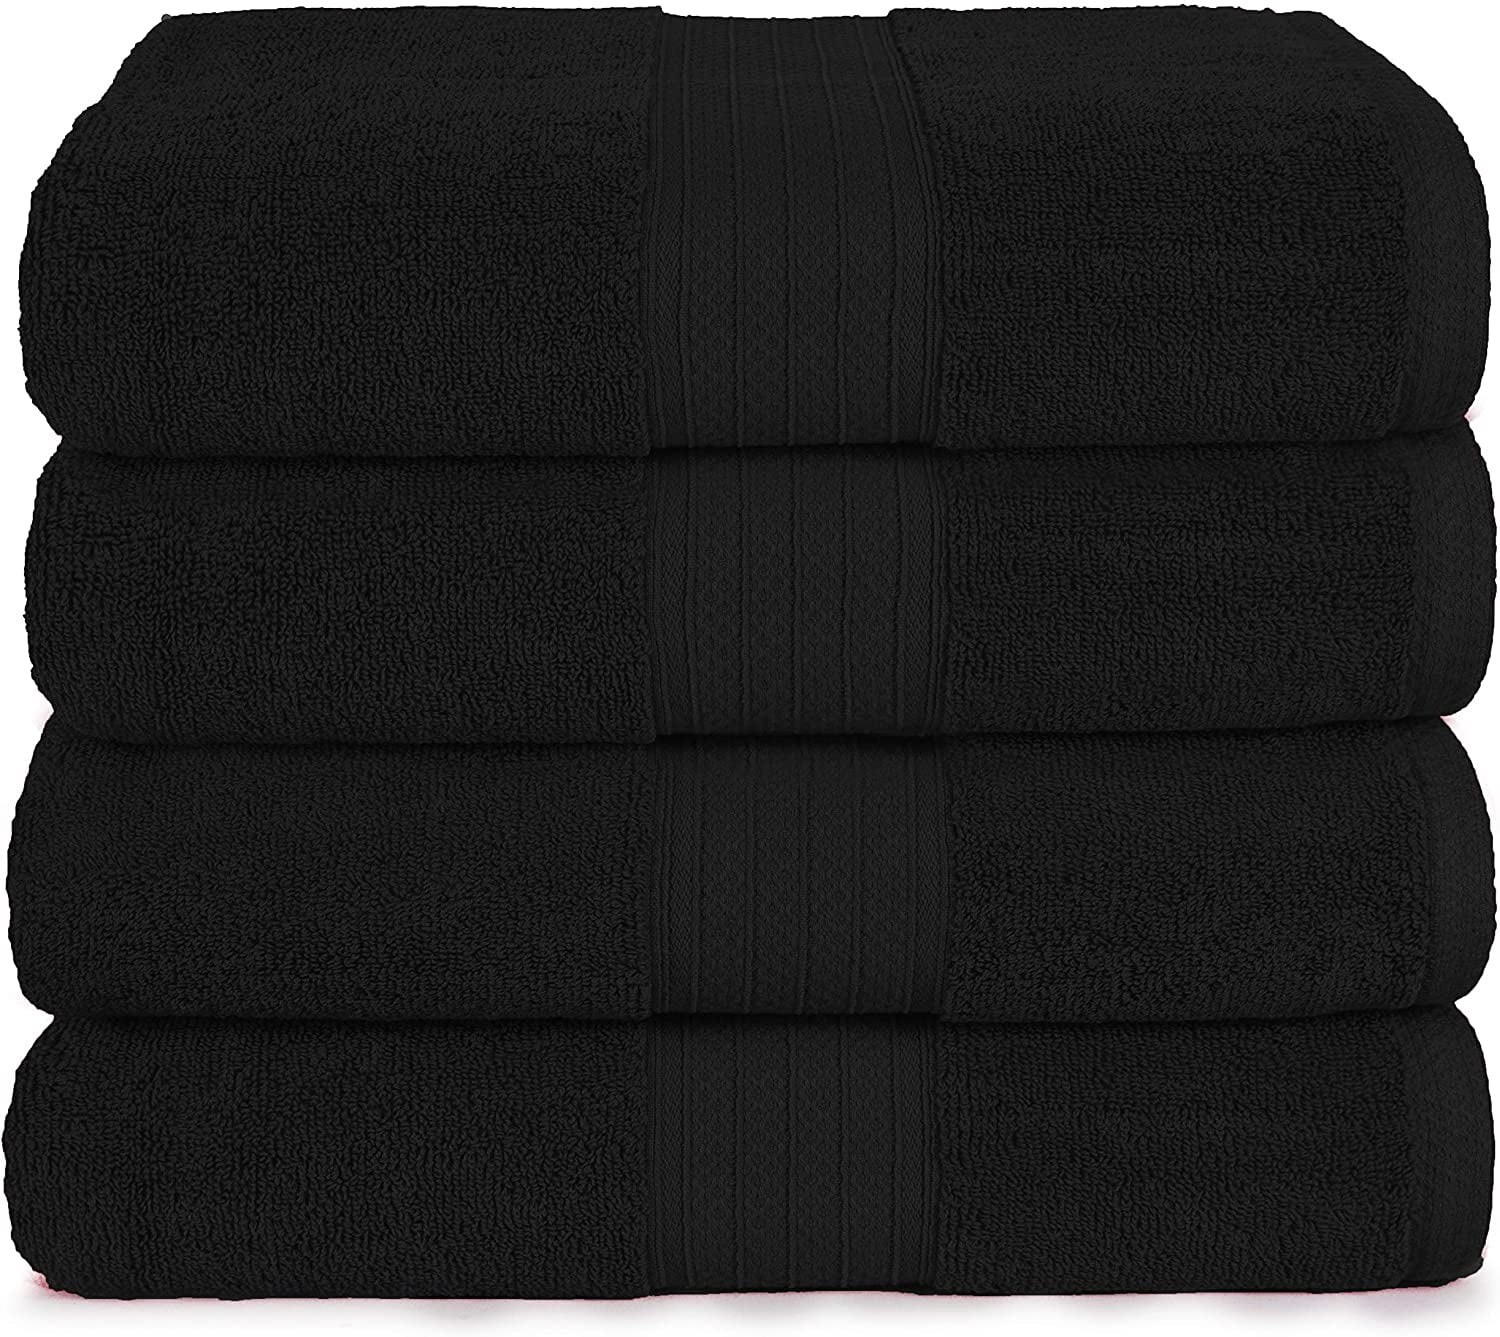 4 Pack Bath Towel Set 100% Combed Cotton 27" X 54" Super Soft 600 GSM SPA Towels 